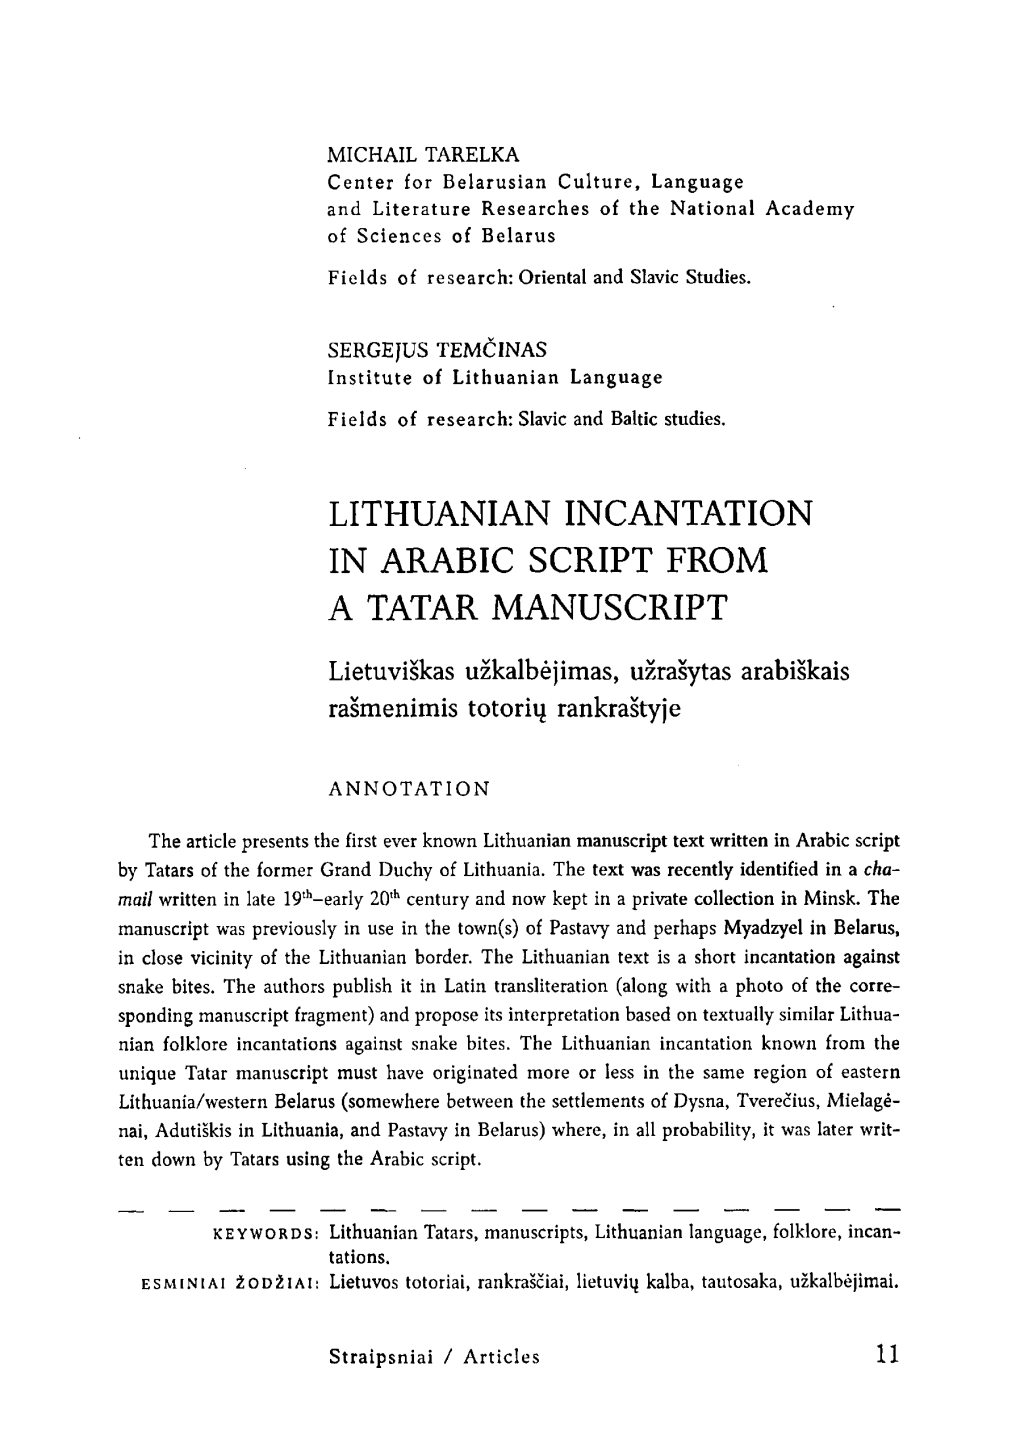 Lithuanian Incantation in Arabic Script from a Tatar Manuscript